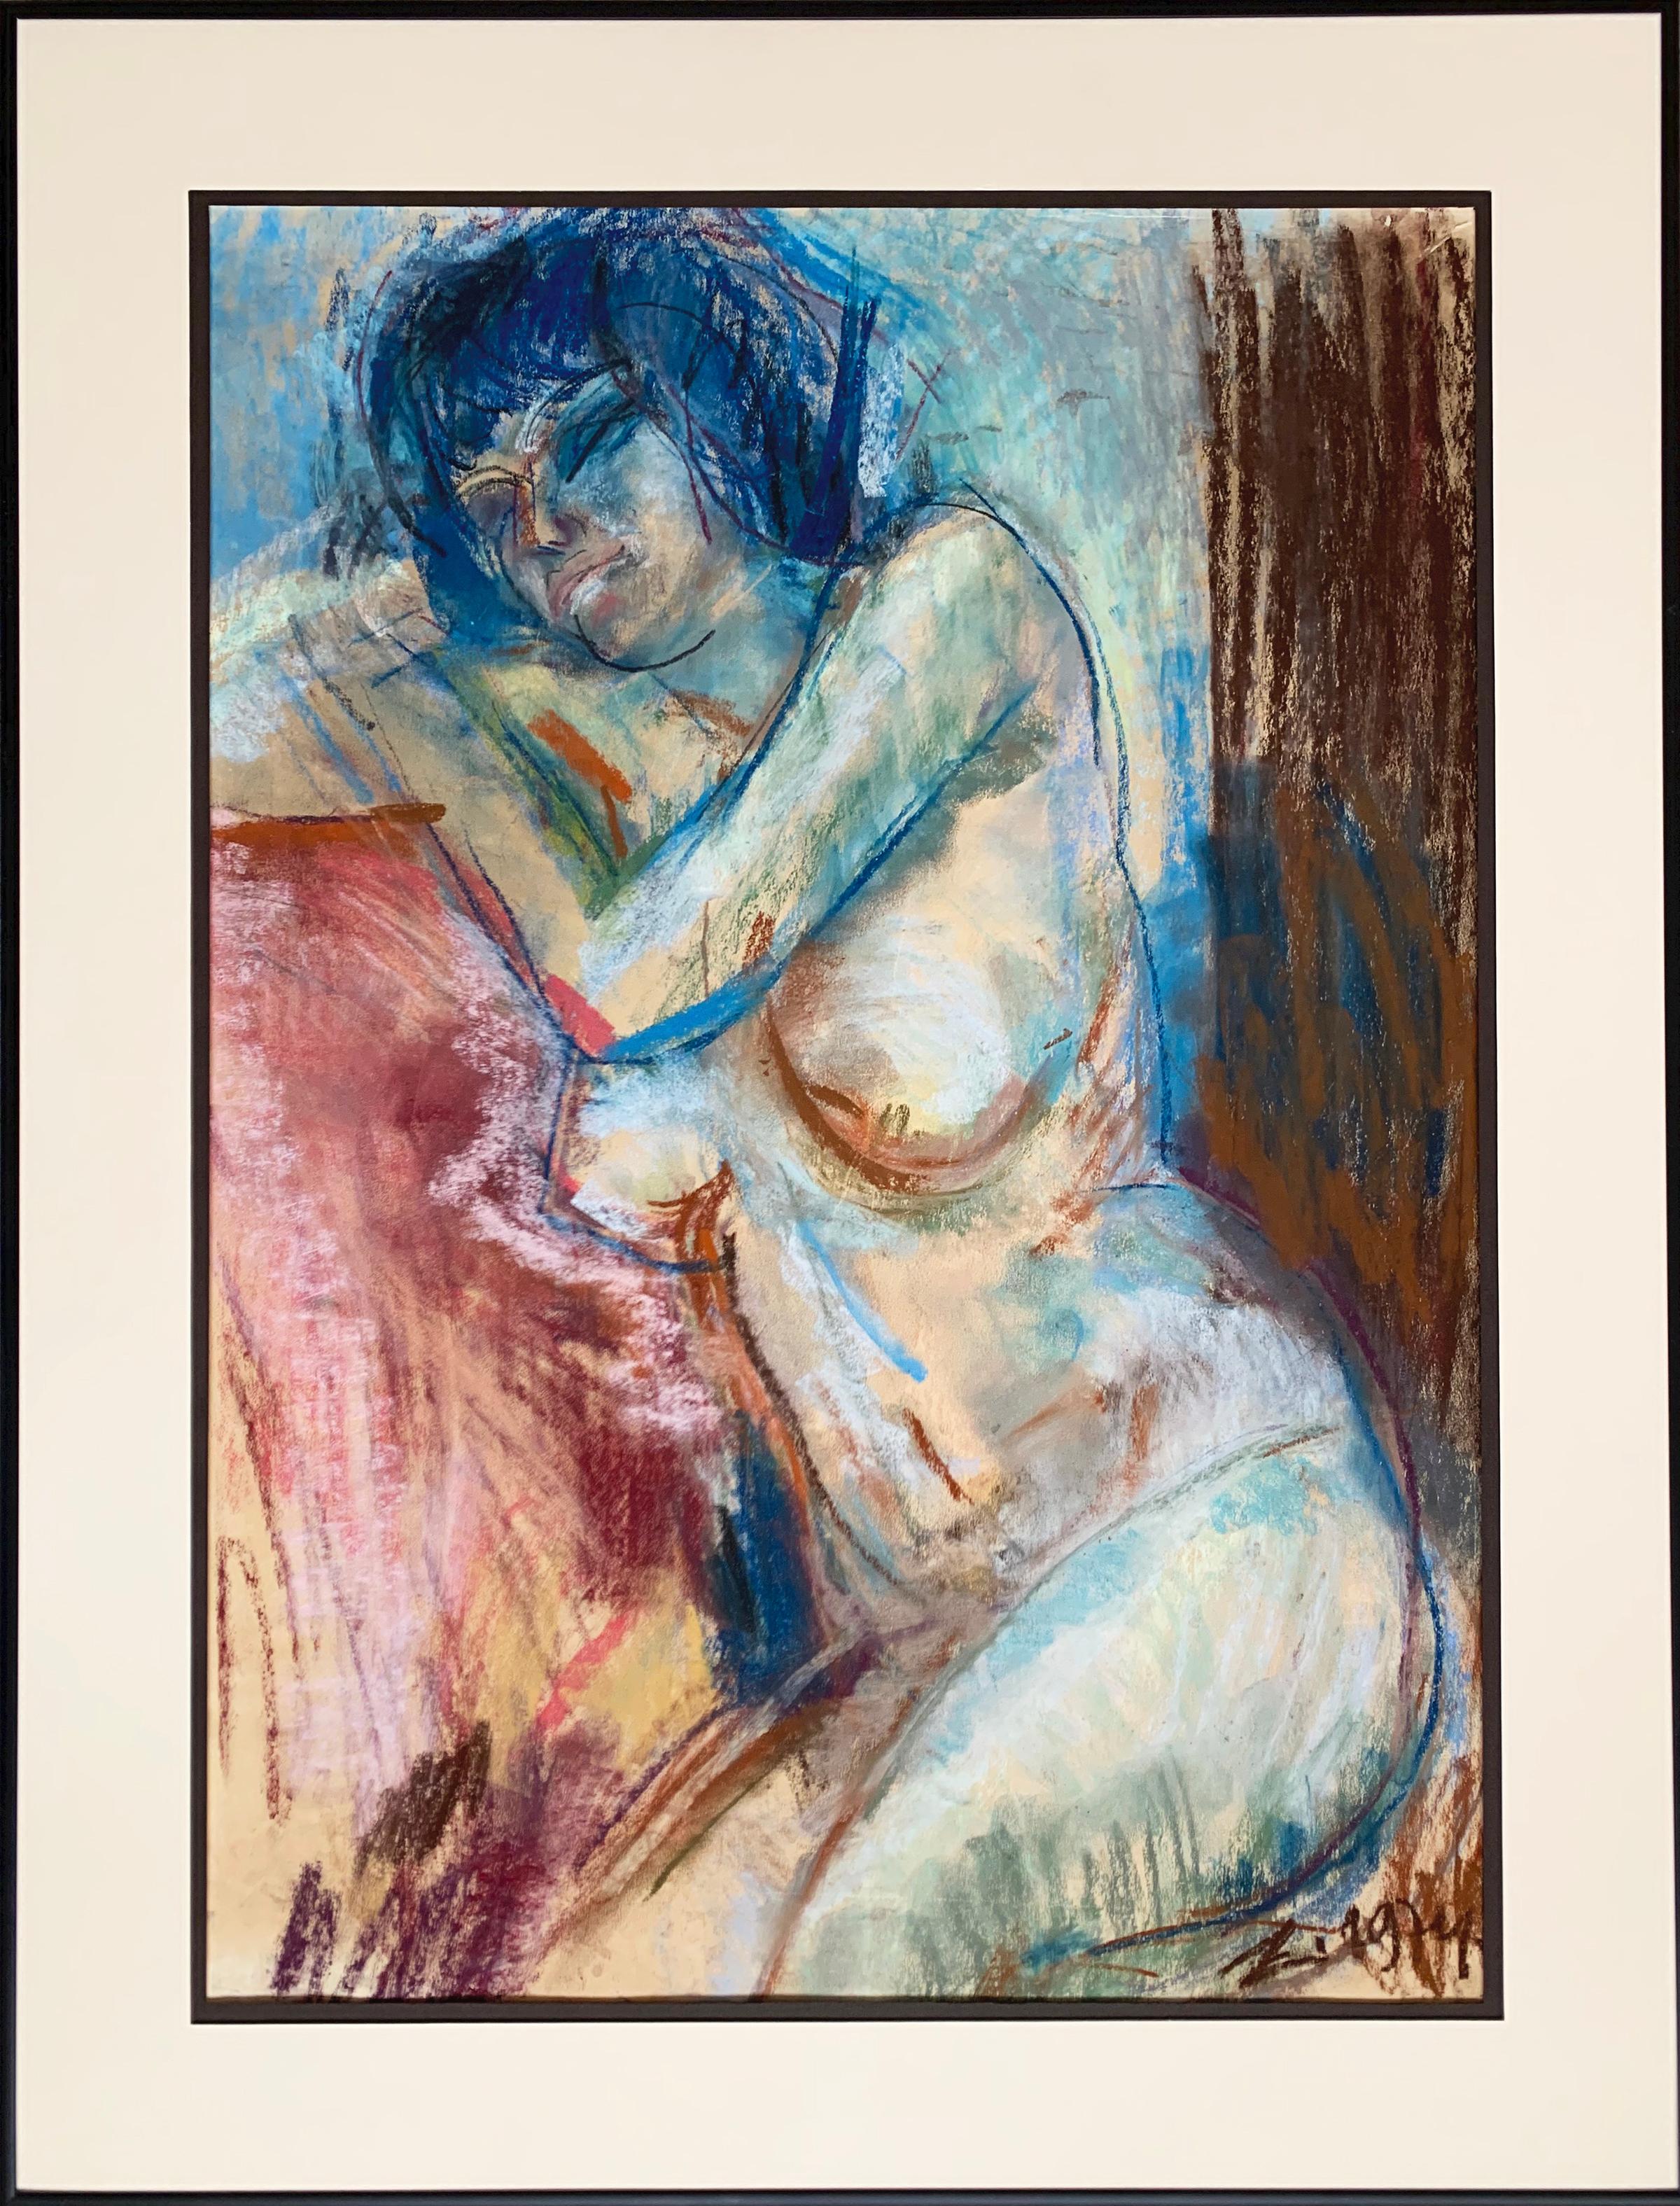 Zolcsák Sándor "Sitting Nude", original pastel on paper